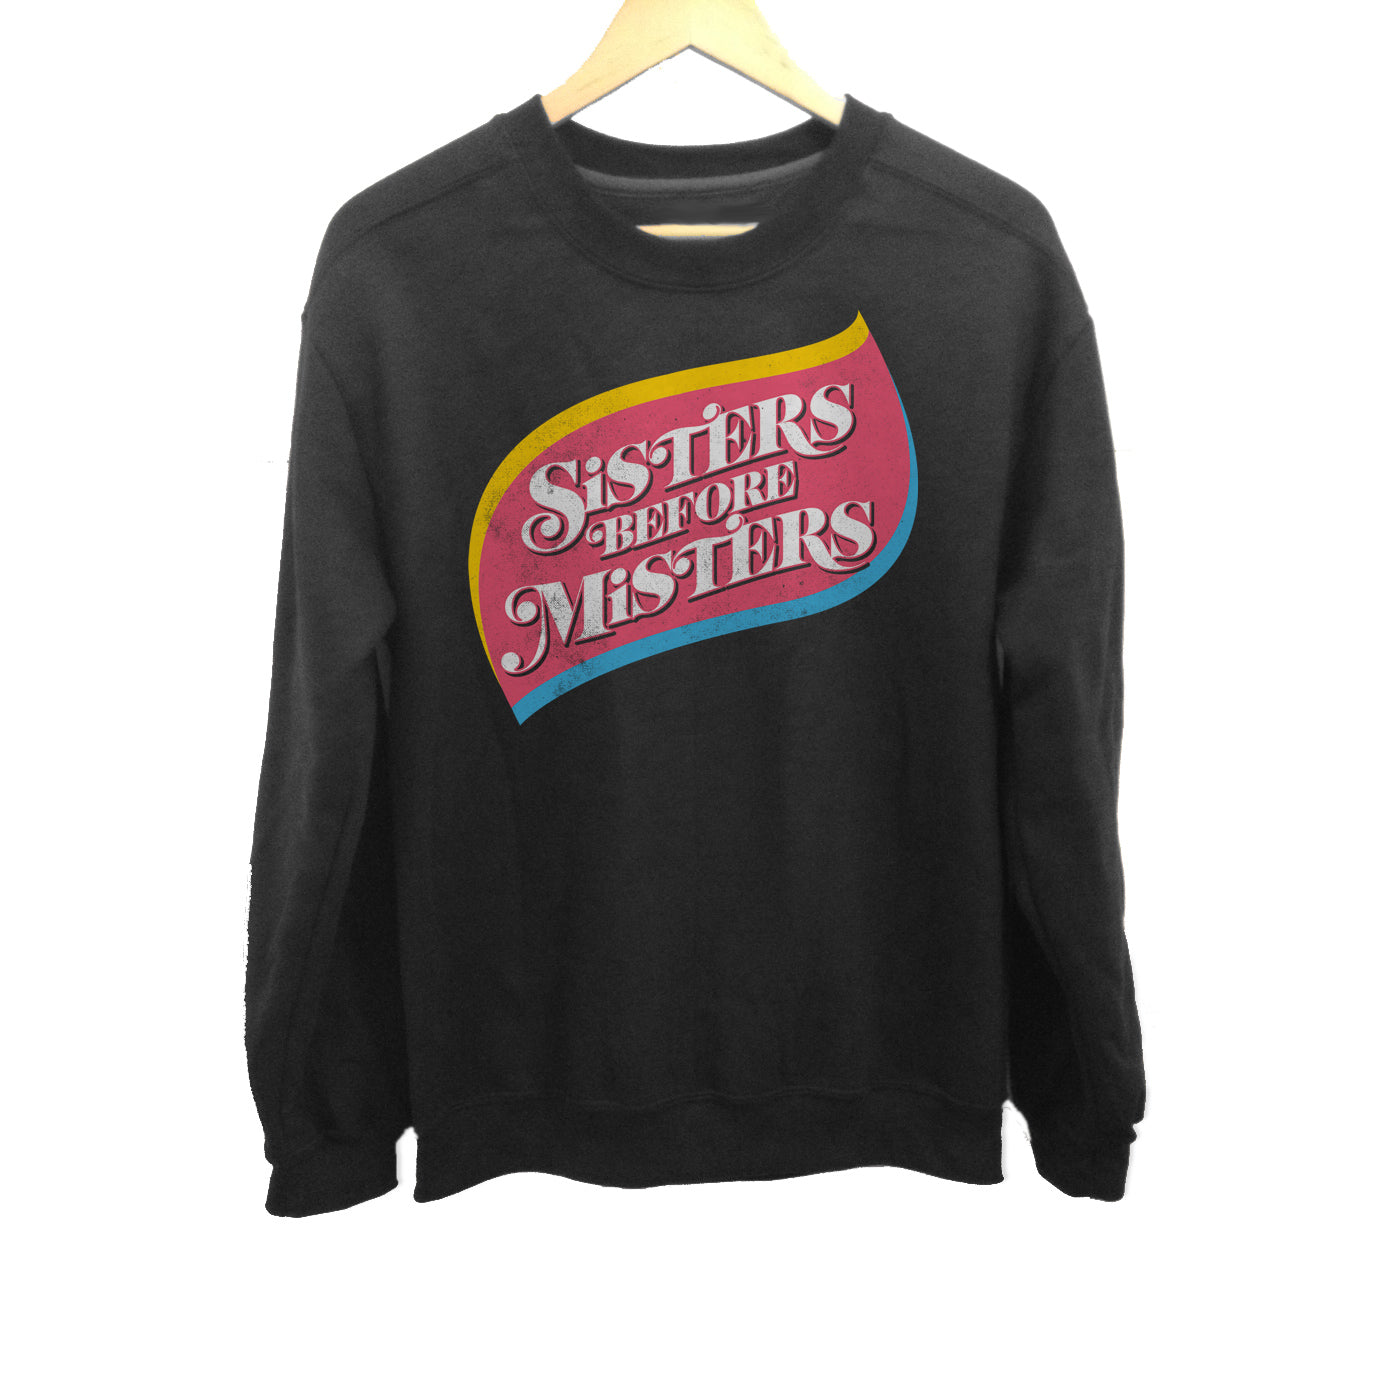 Unisex Sisters Before Misters Sweatshirt - Feminist Shirt